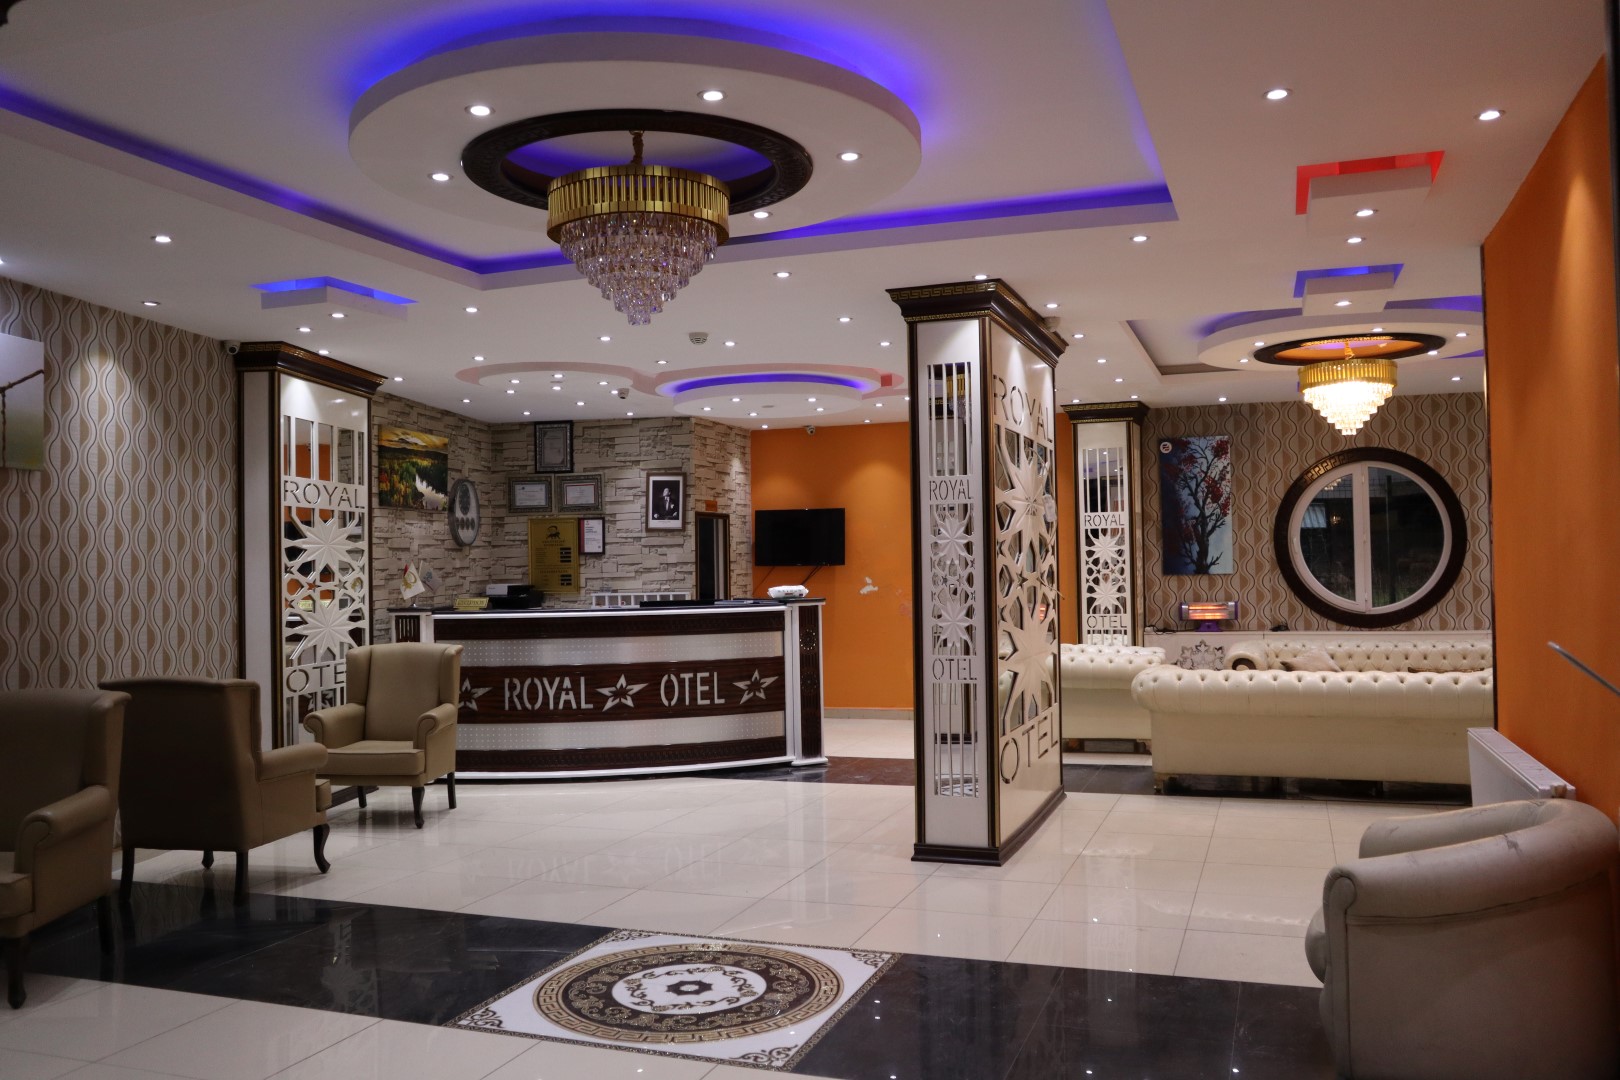 Meka Royal Otel (7) (Large)